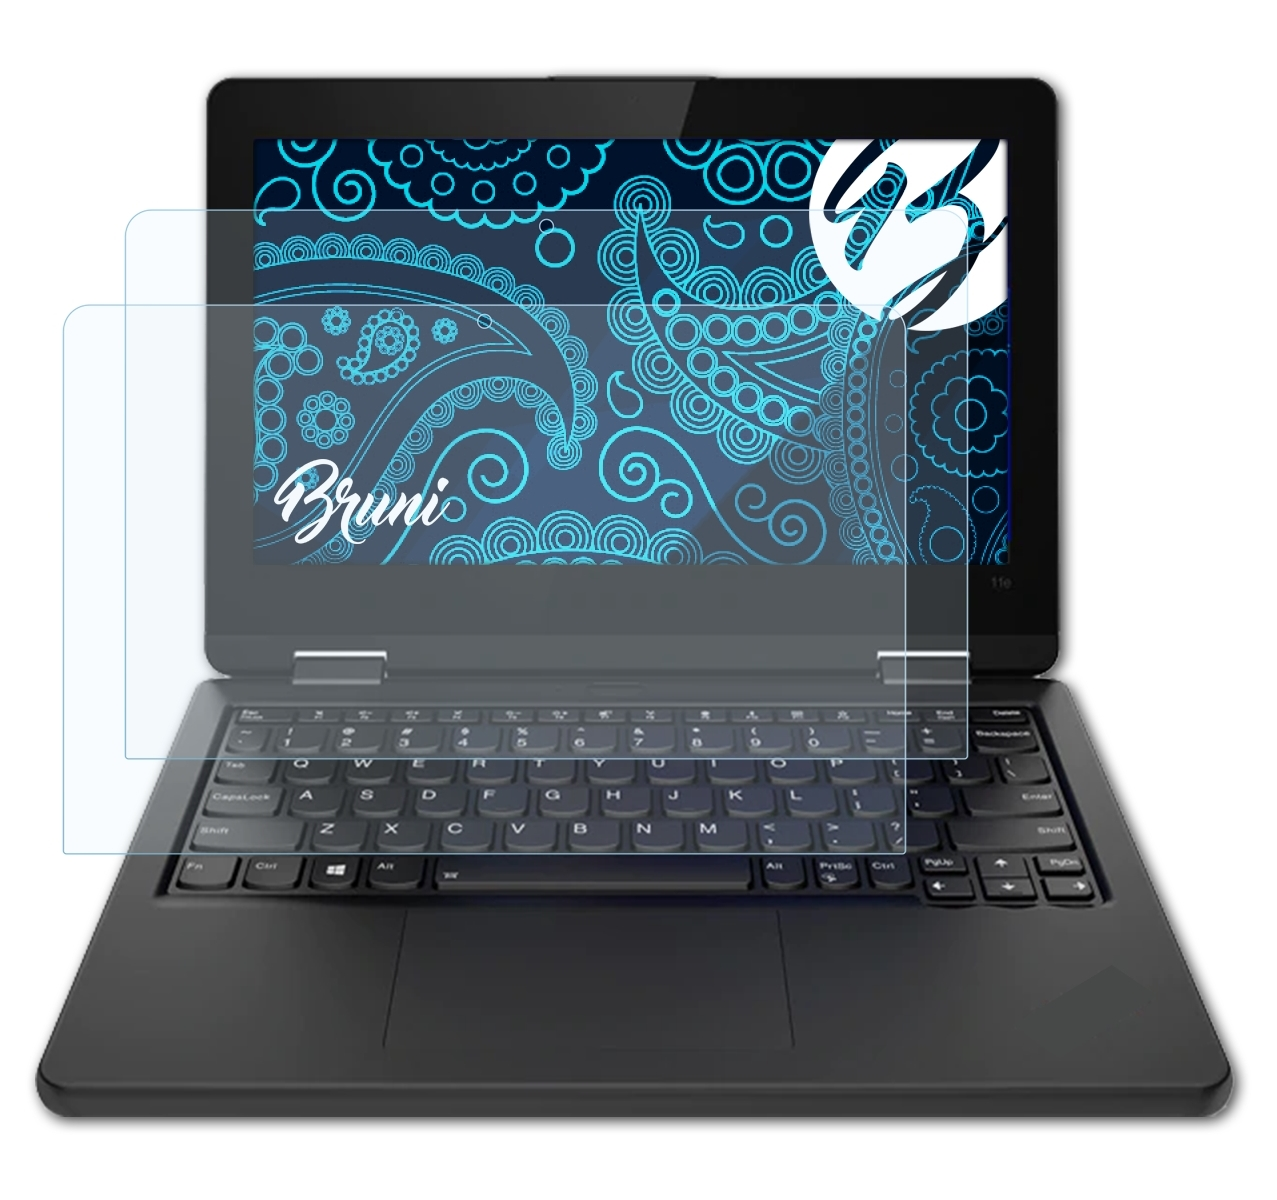 6)) Schutzfolie(für (Gen BRUNI Basics-Clear 11e ThinkPad 2x Lenovo Yoga